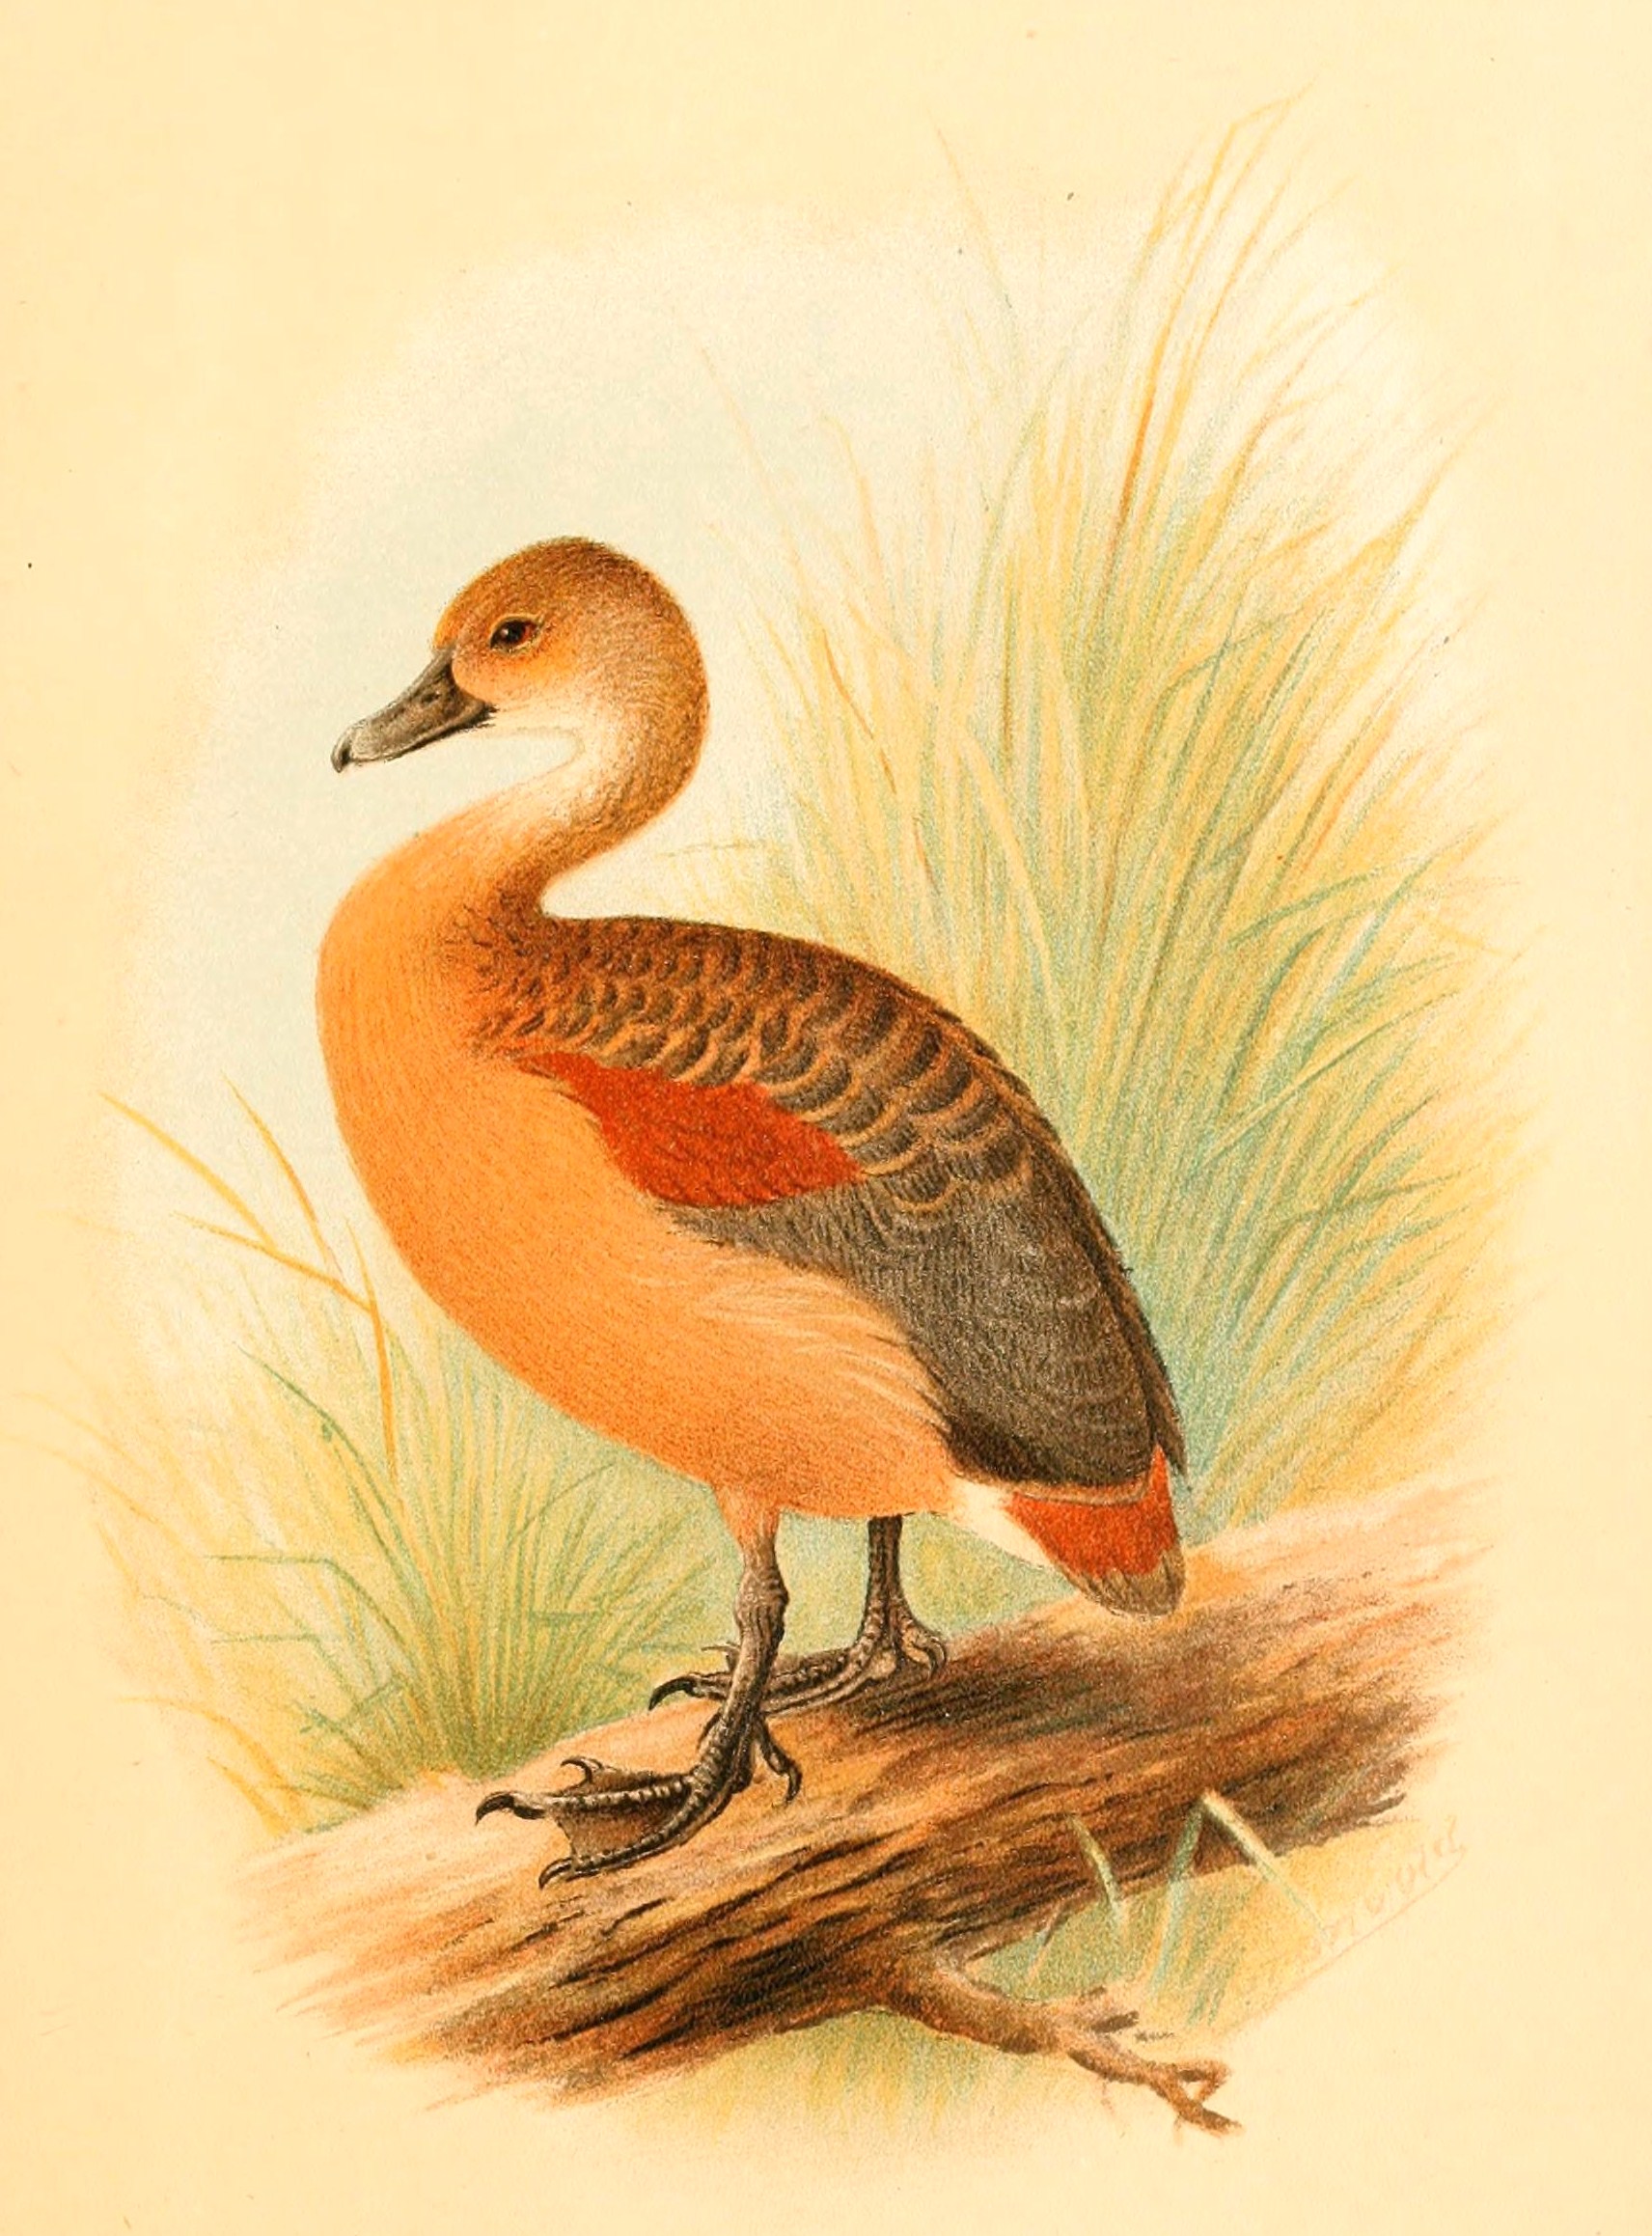 Le nâu, Lesser Whistling Duck - Dendrocygna javanica